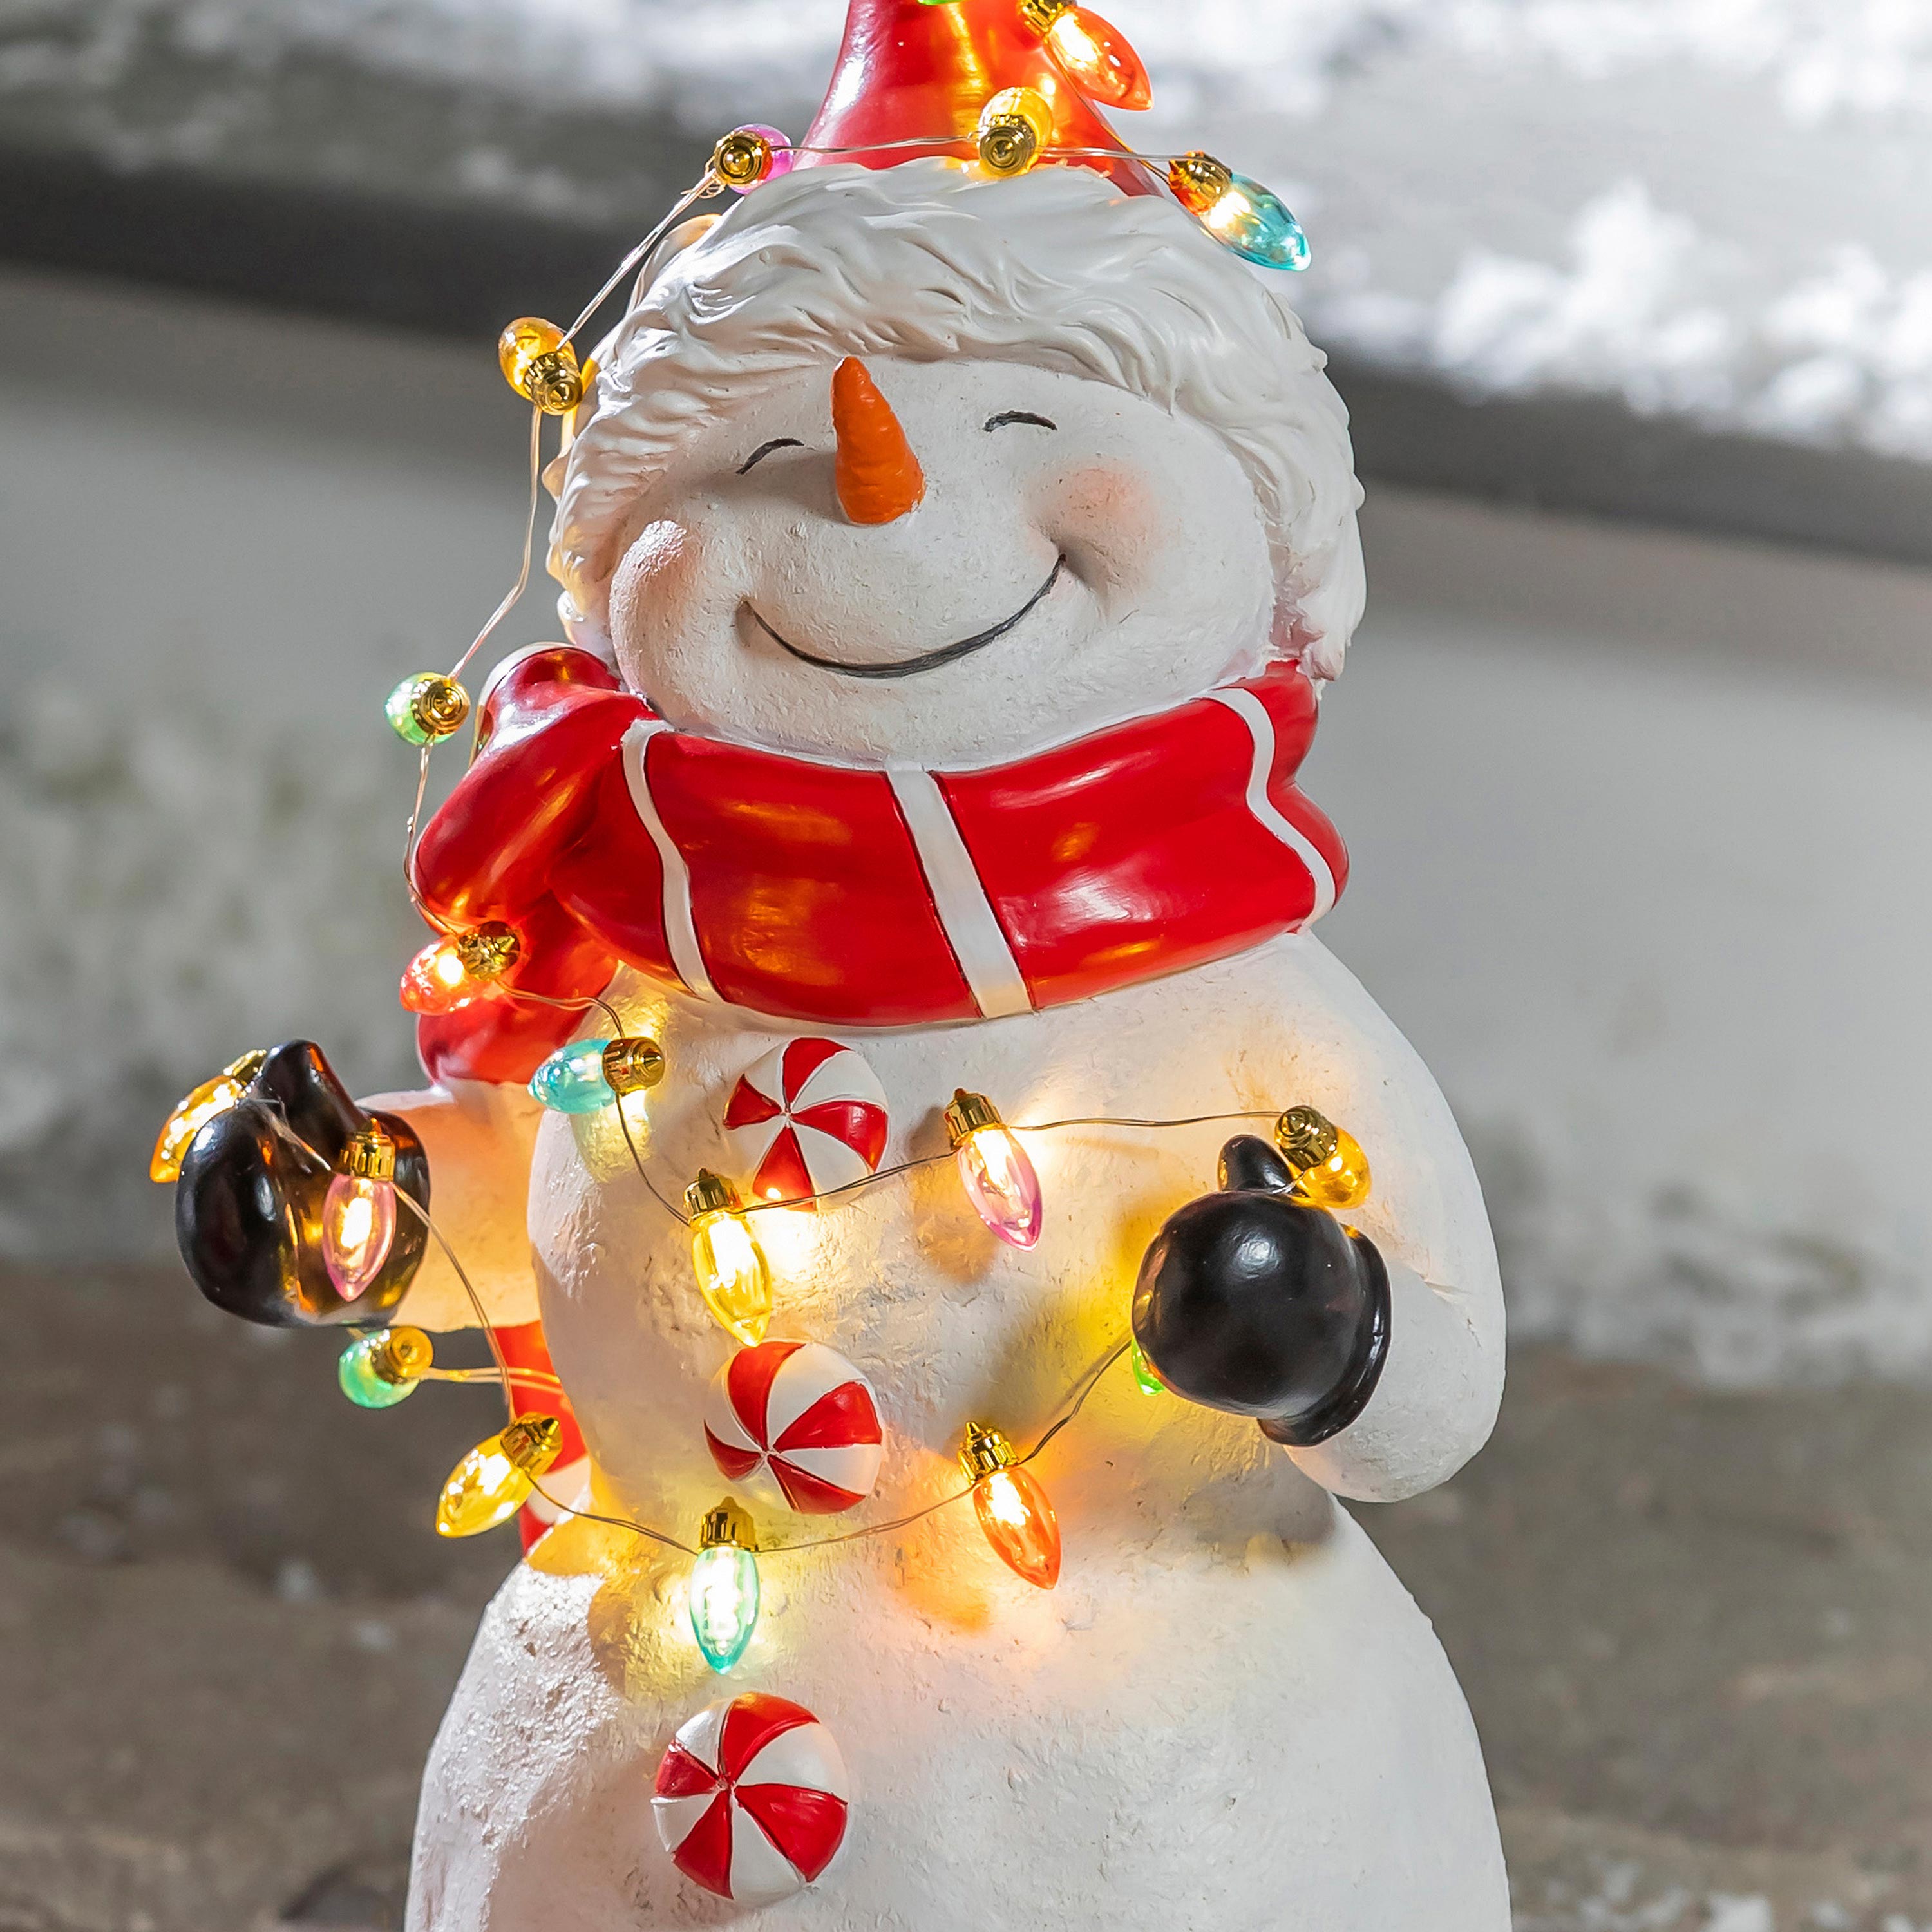 Outdoor Snowman Christmas Decorations - Christmas Celebration